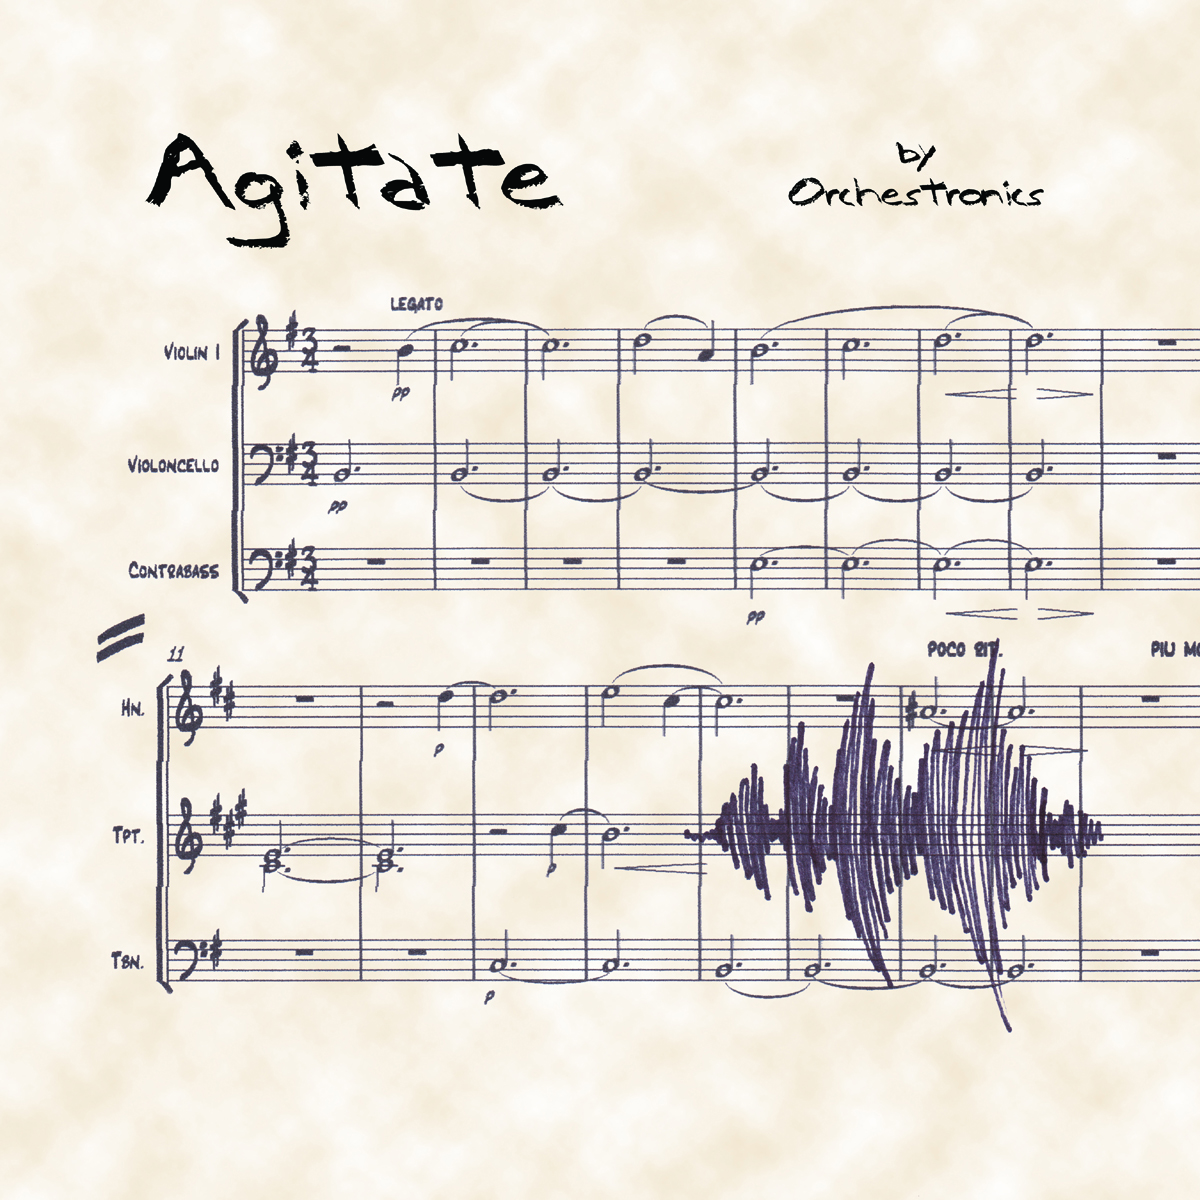 Agitate Album by Orchestronics